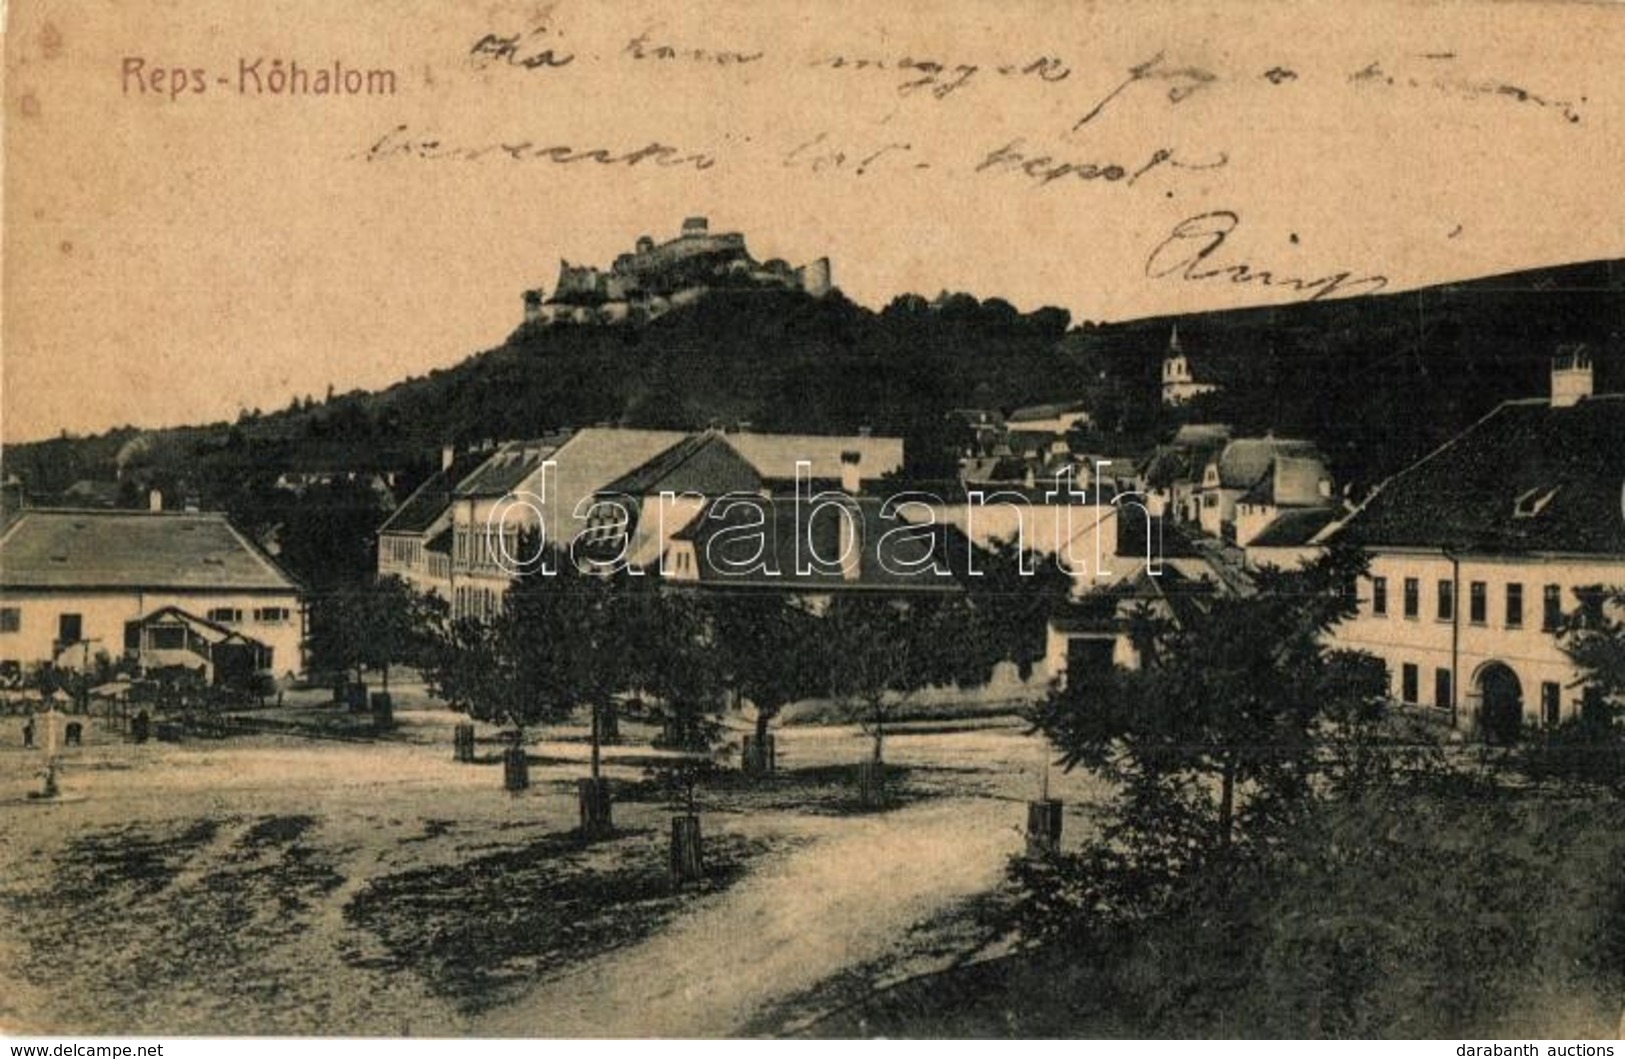 T2/T3 1909 Kőhalom, Reps, Rupea; Utcakép, Vár. W. L. (?) 1777. Kiadja Johanna Gunesch / Cetatea Rupea / Street View, Cas - Ohne Zuordnung